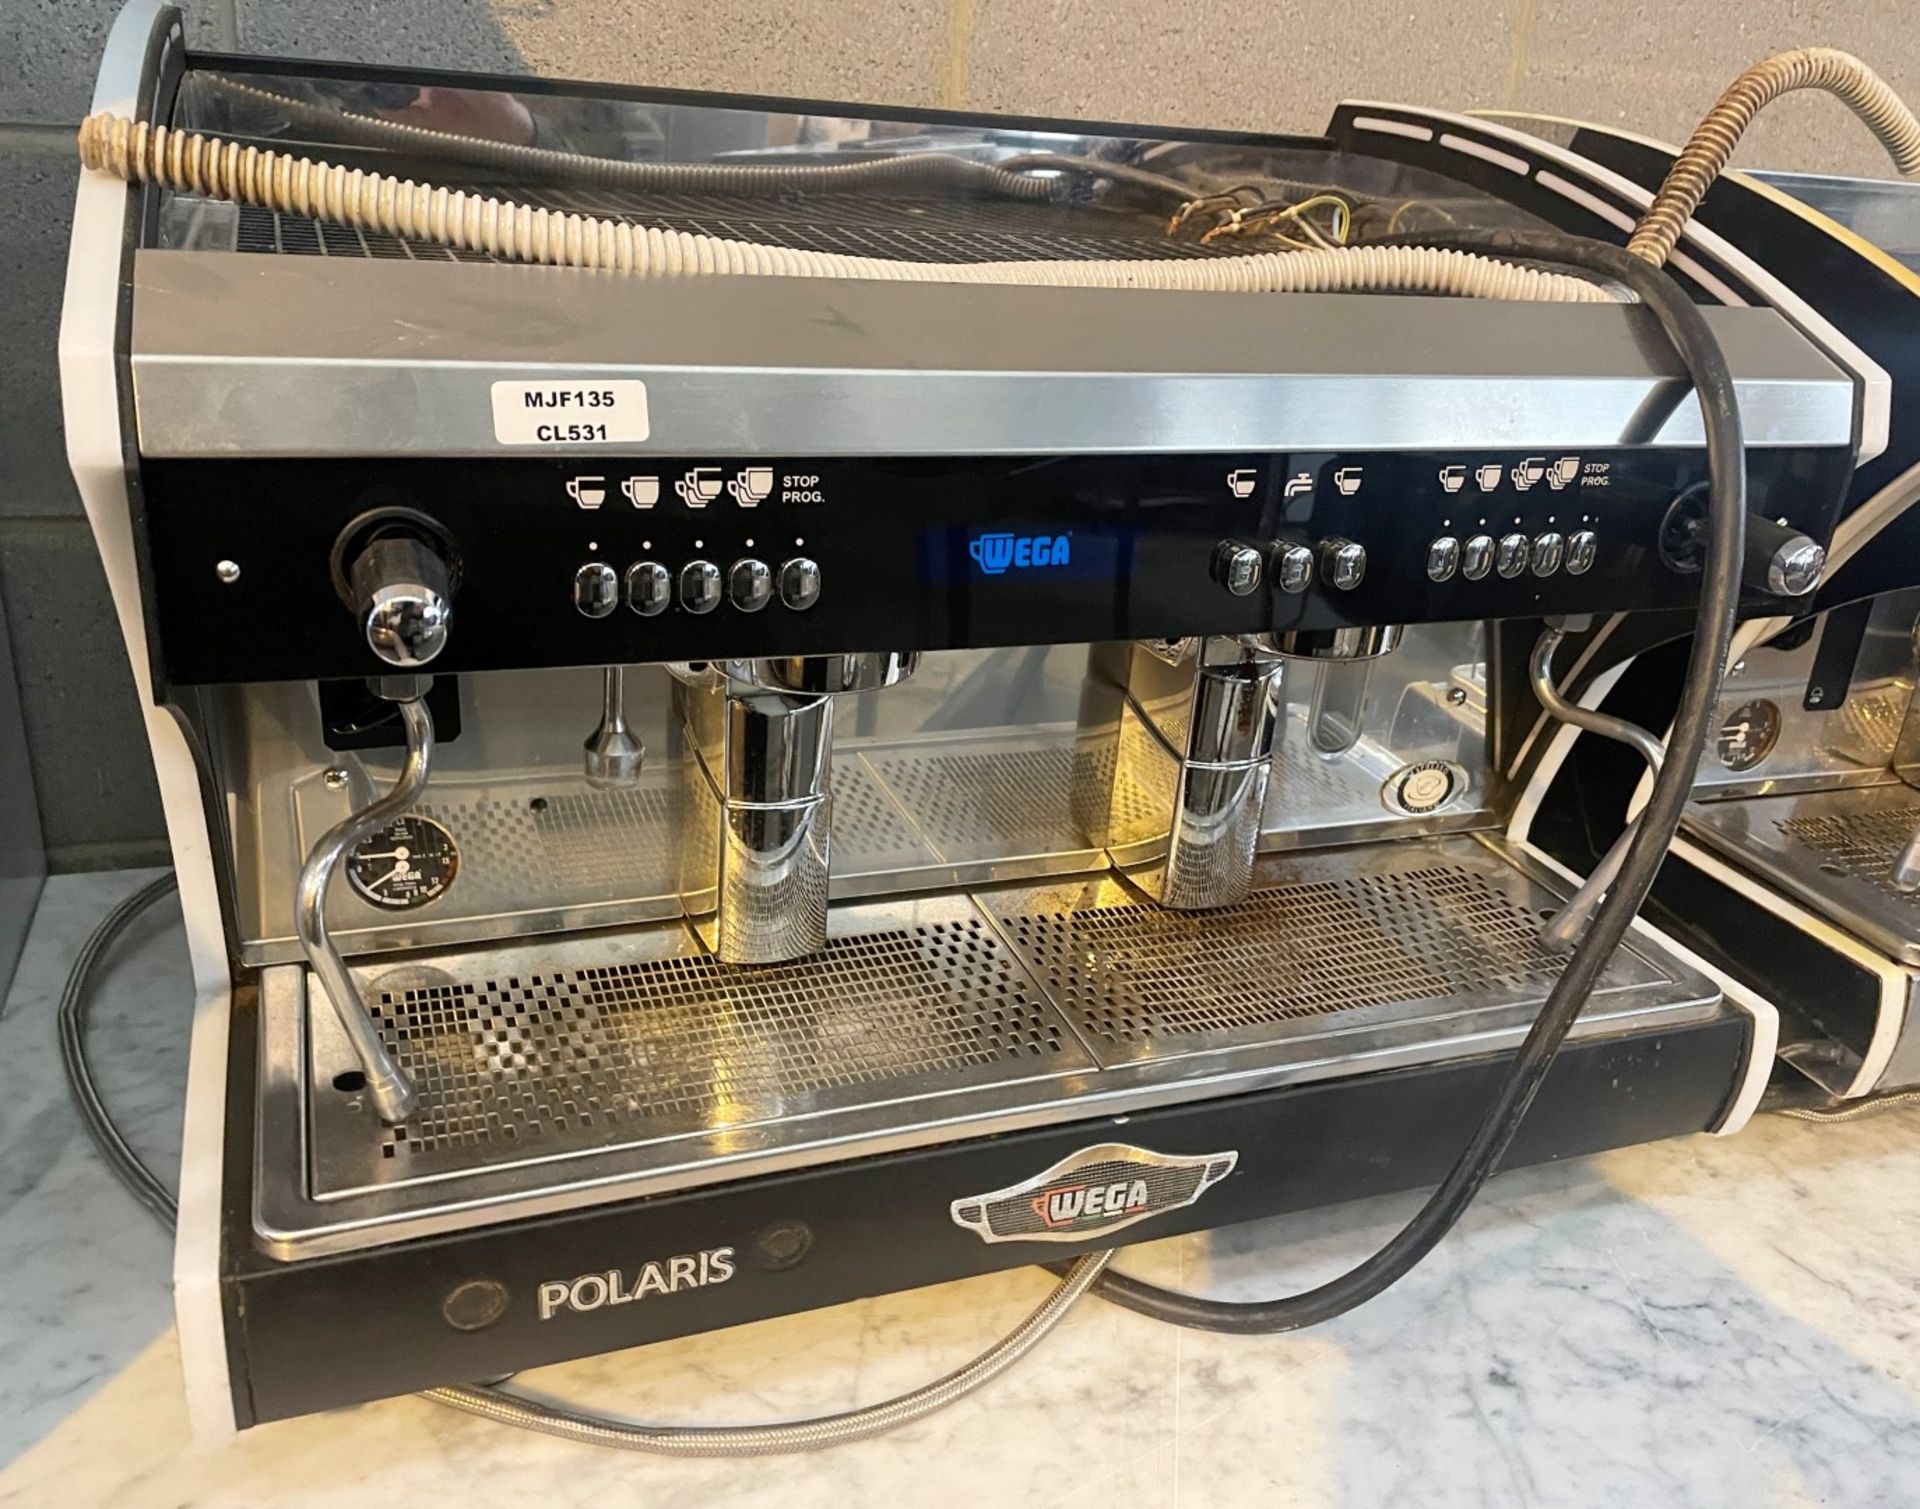 1 x Polaris Wega 2 Group Commercial Espresso Coffee Machine - Stainless Steel / Black Finish